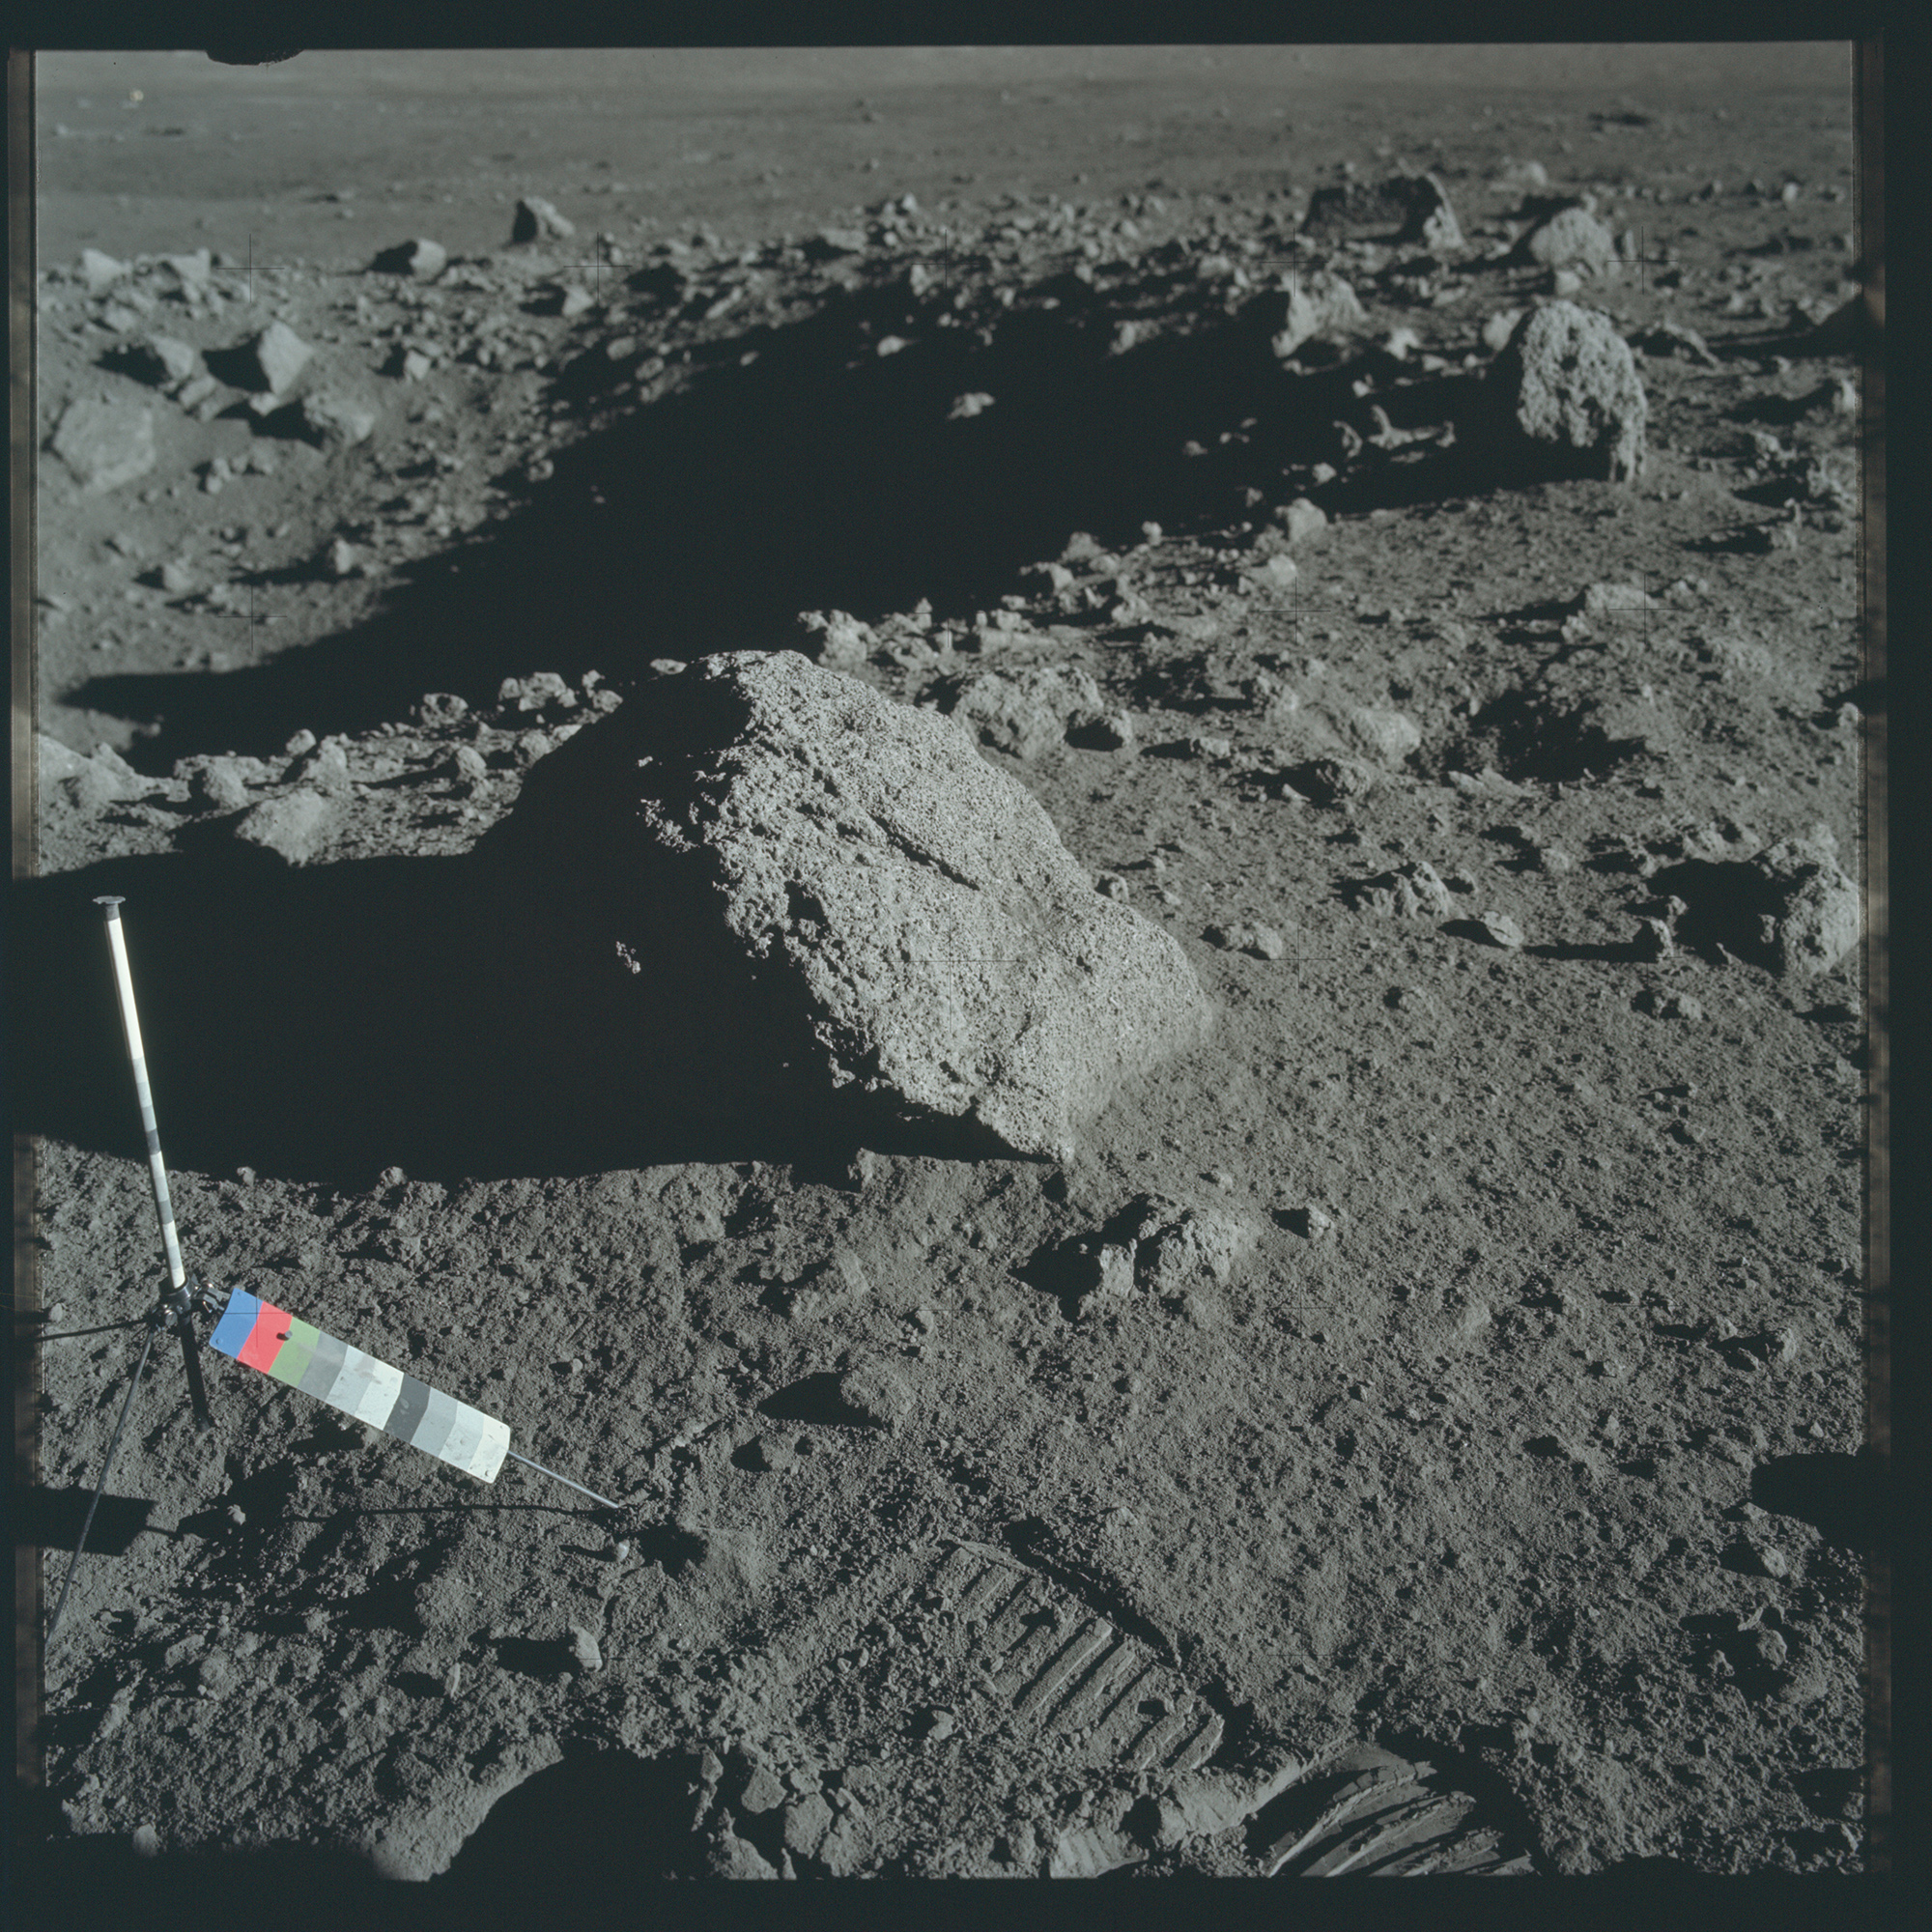 apollo-17-mission-moon-landing-252.jpg